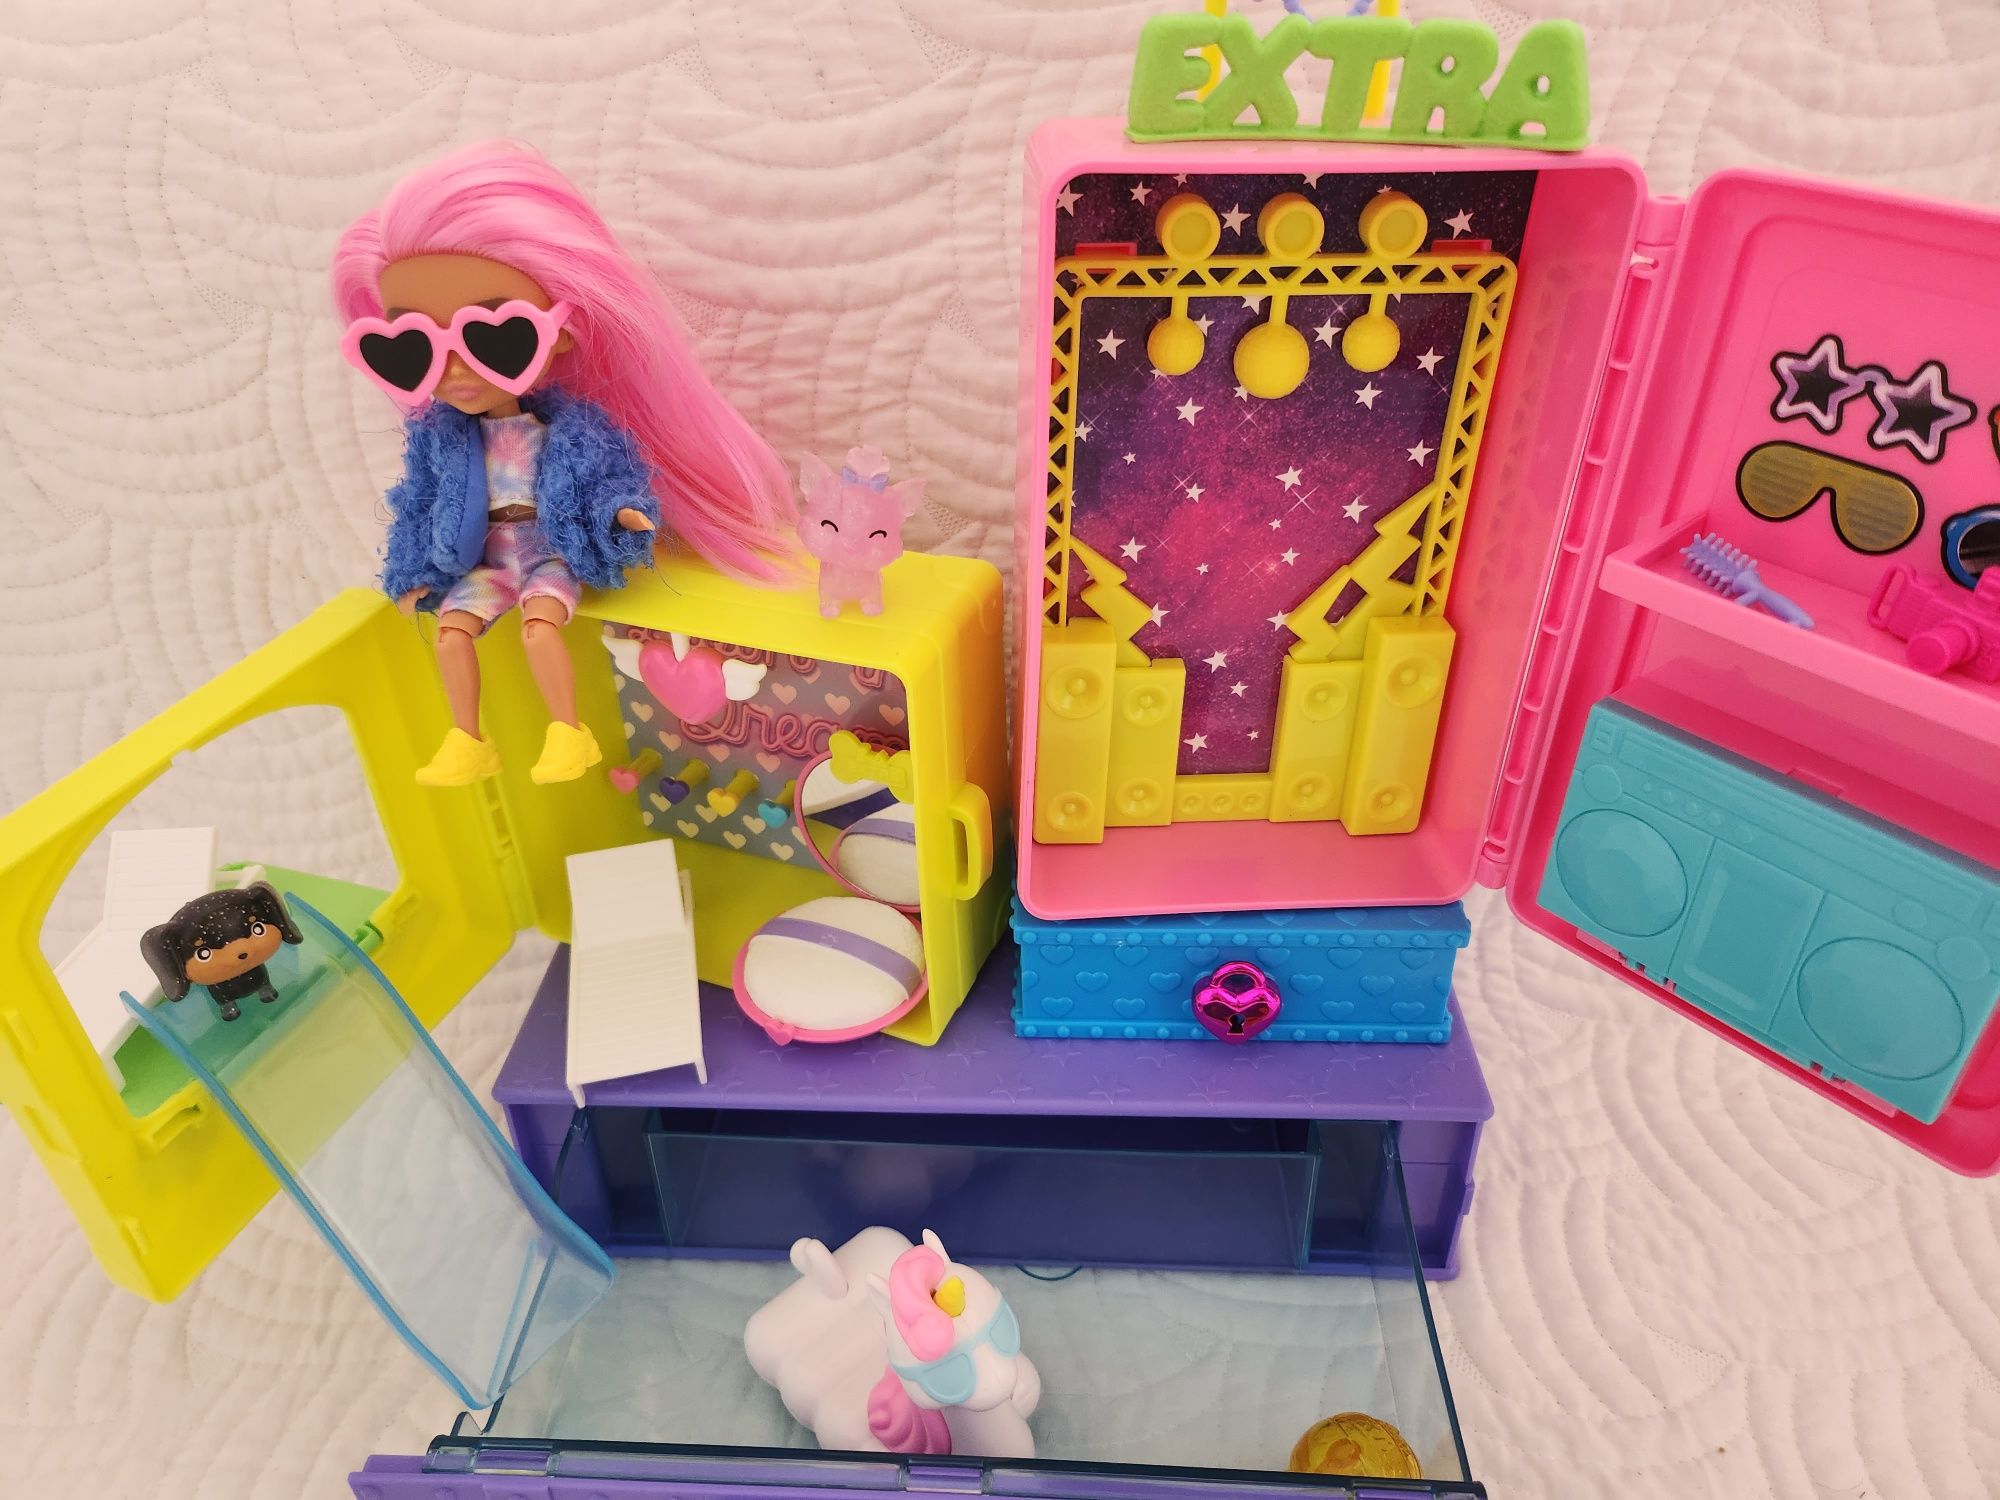 Set de joaca Barbie Extra mini Livin' in dream